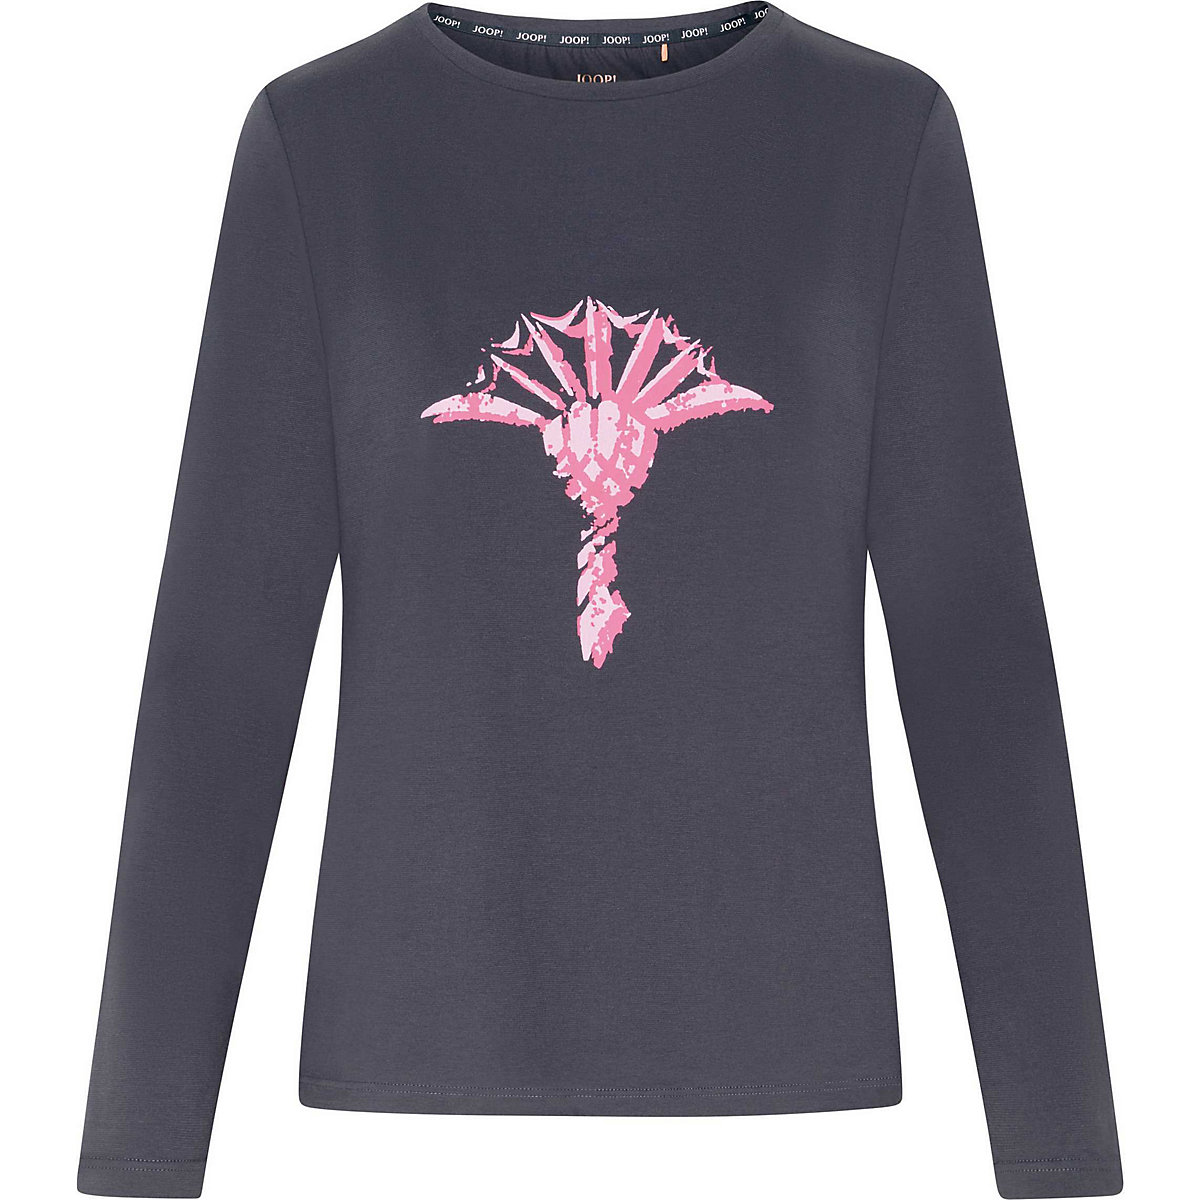 JOOP! Damen Longsleeve Shirt Baumwolle Rudhals Cornflower einfarbig lang T-Shirts rosa/grau